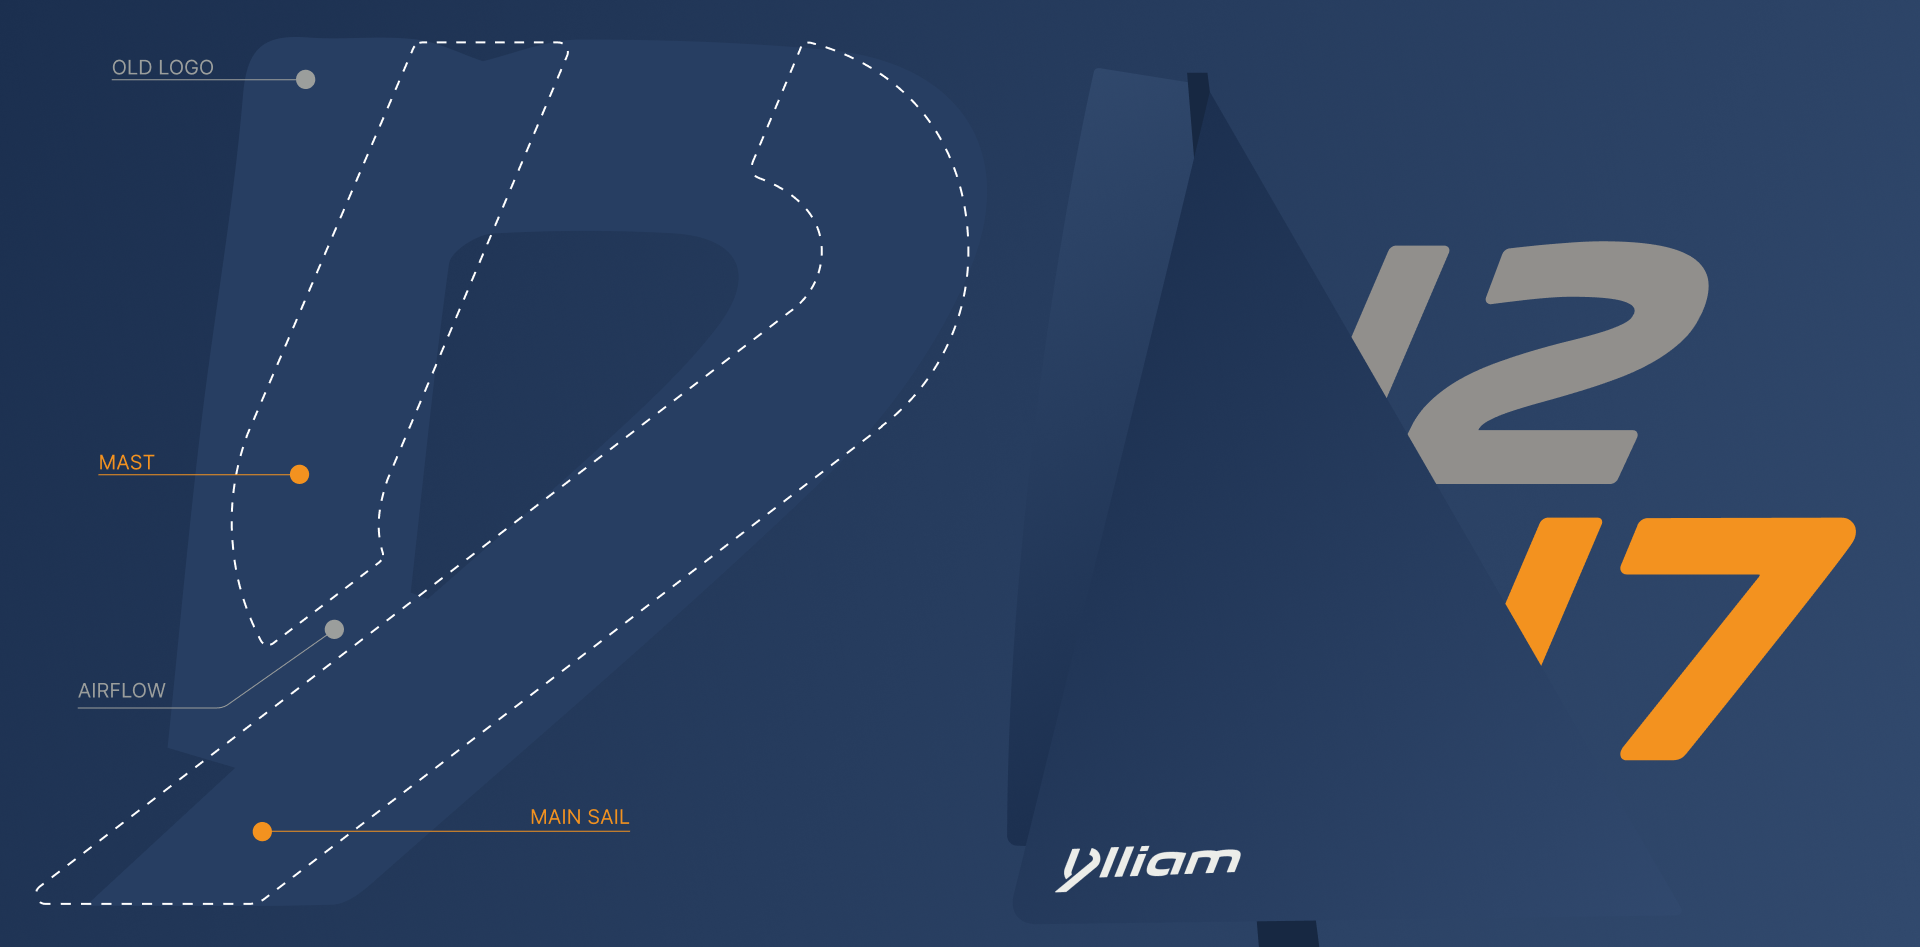 Ylliam logo